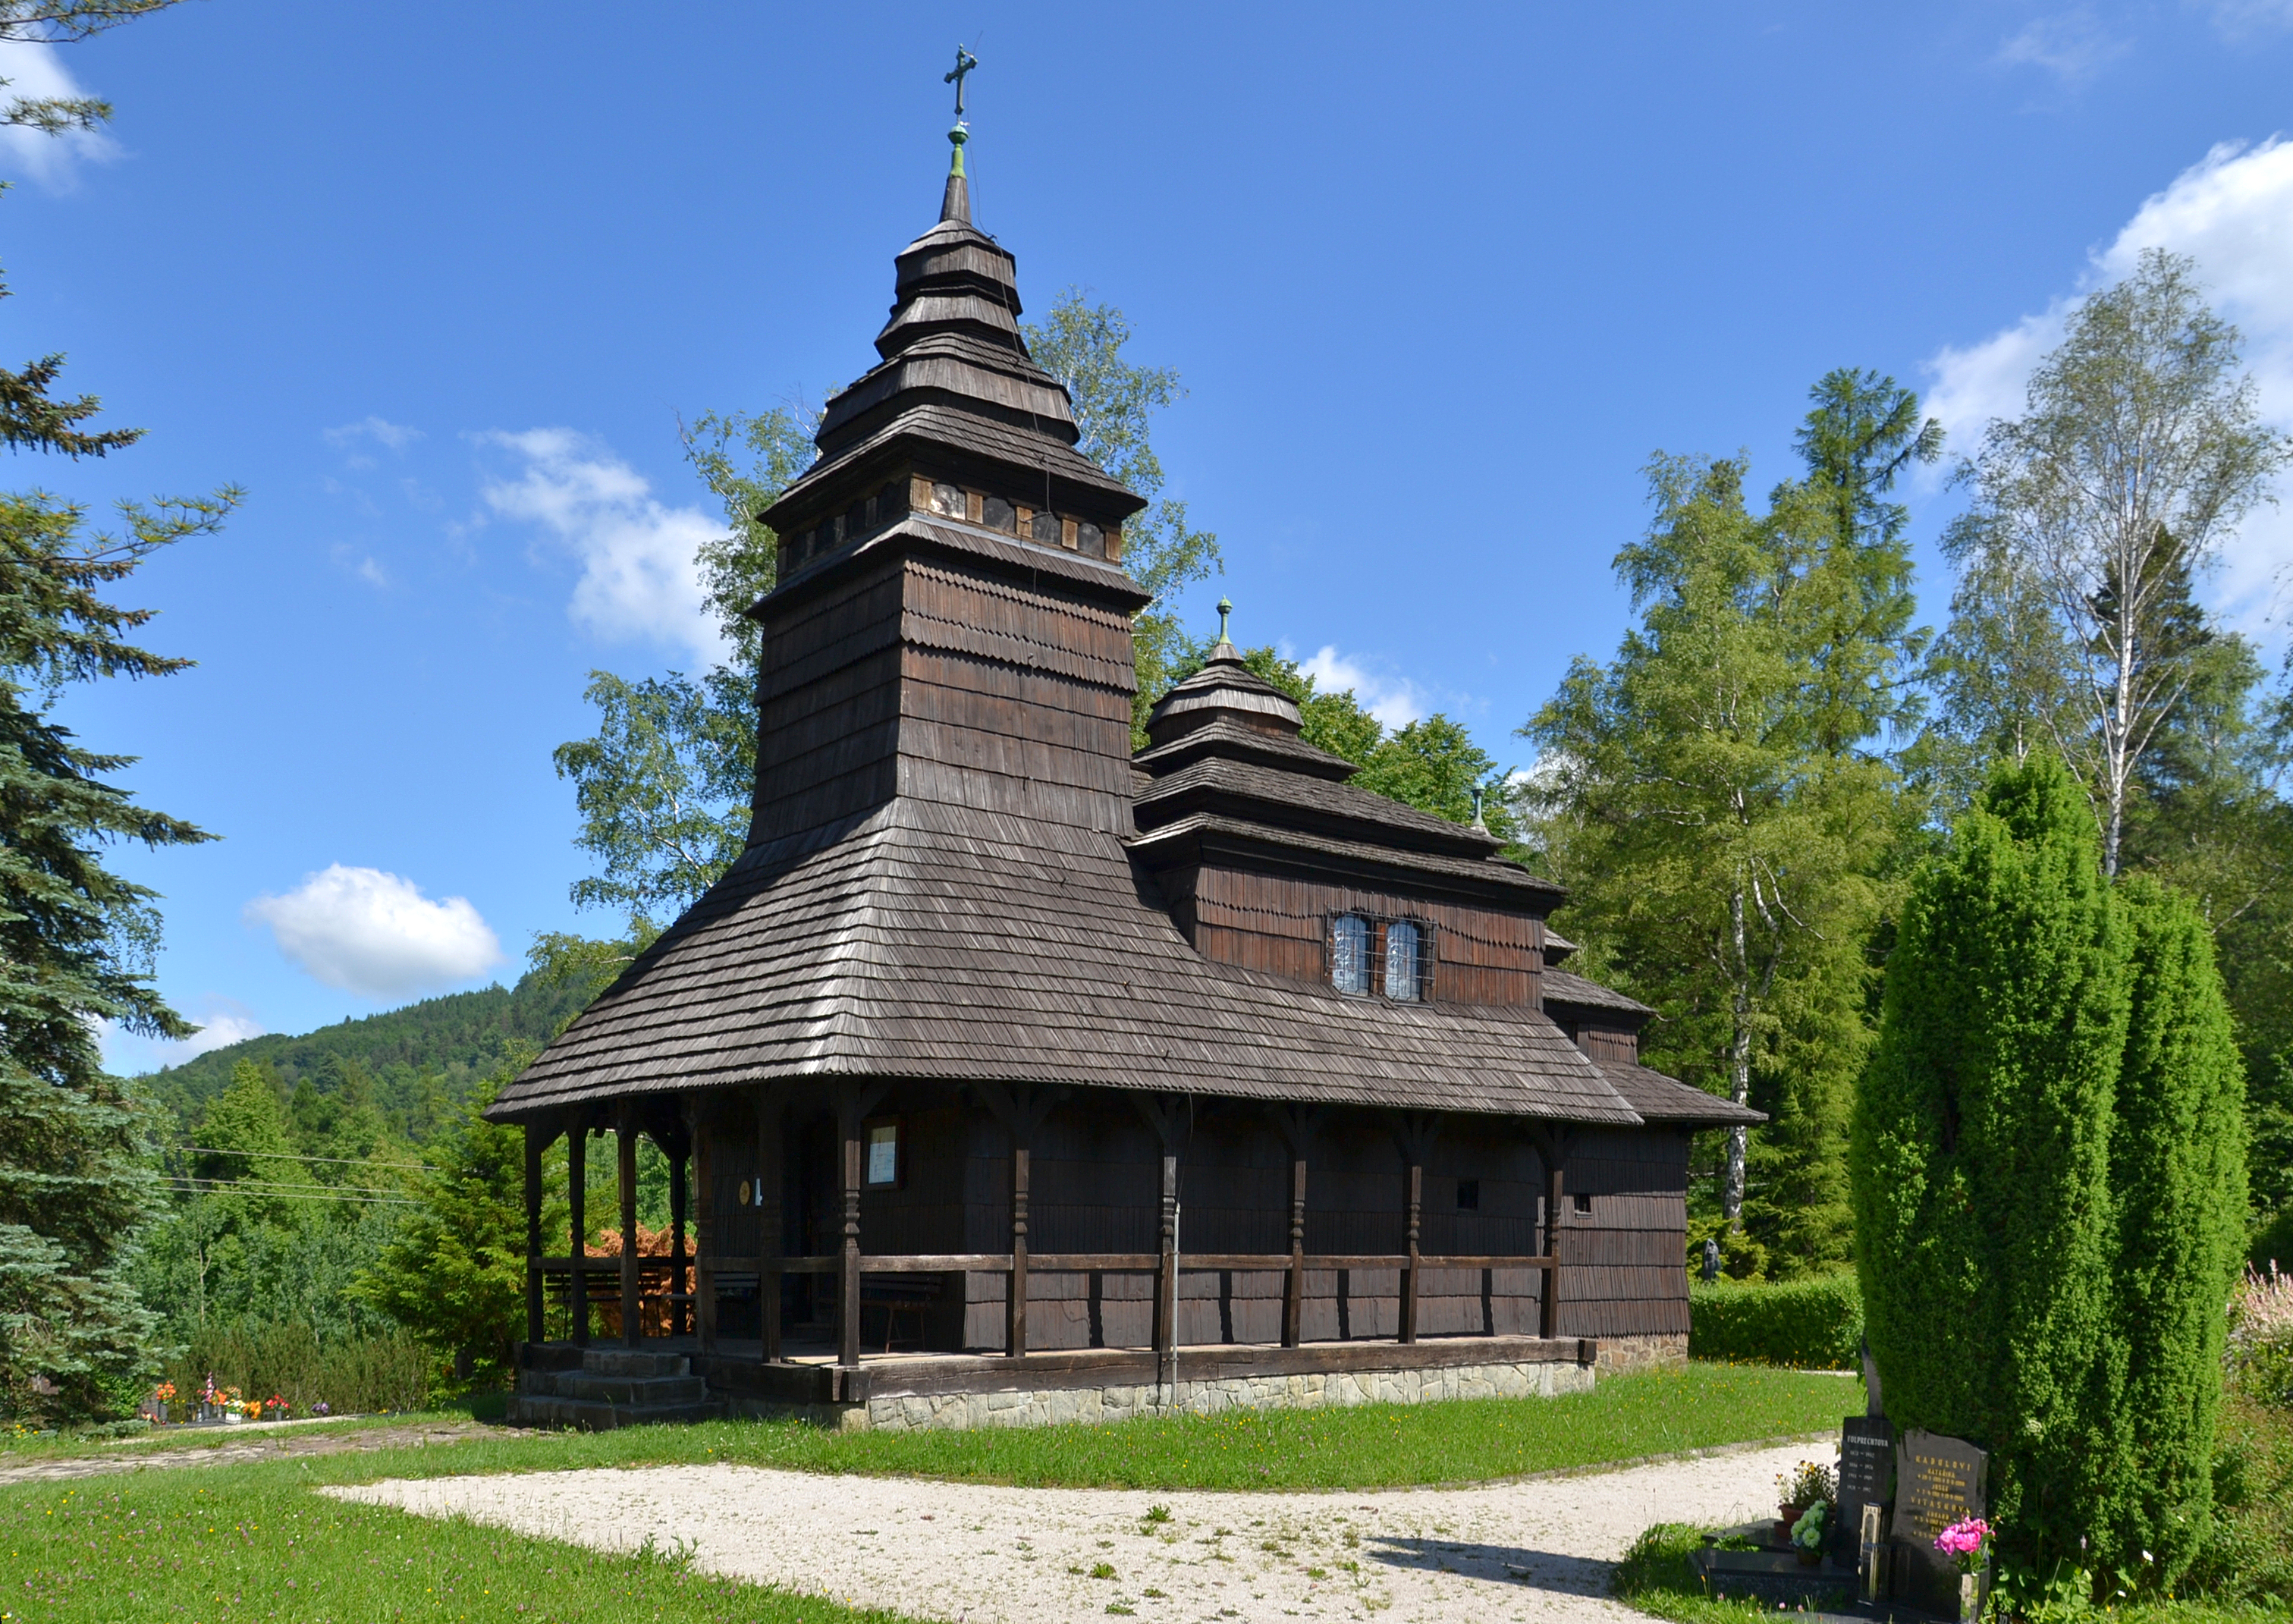 Kunčice pod Ondřejníkem - wooden church